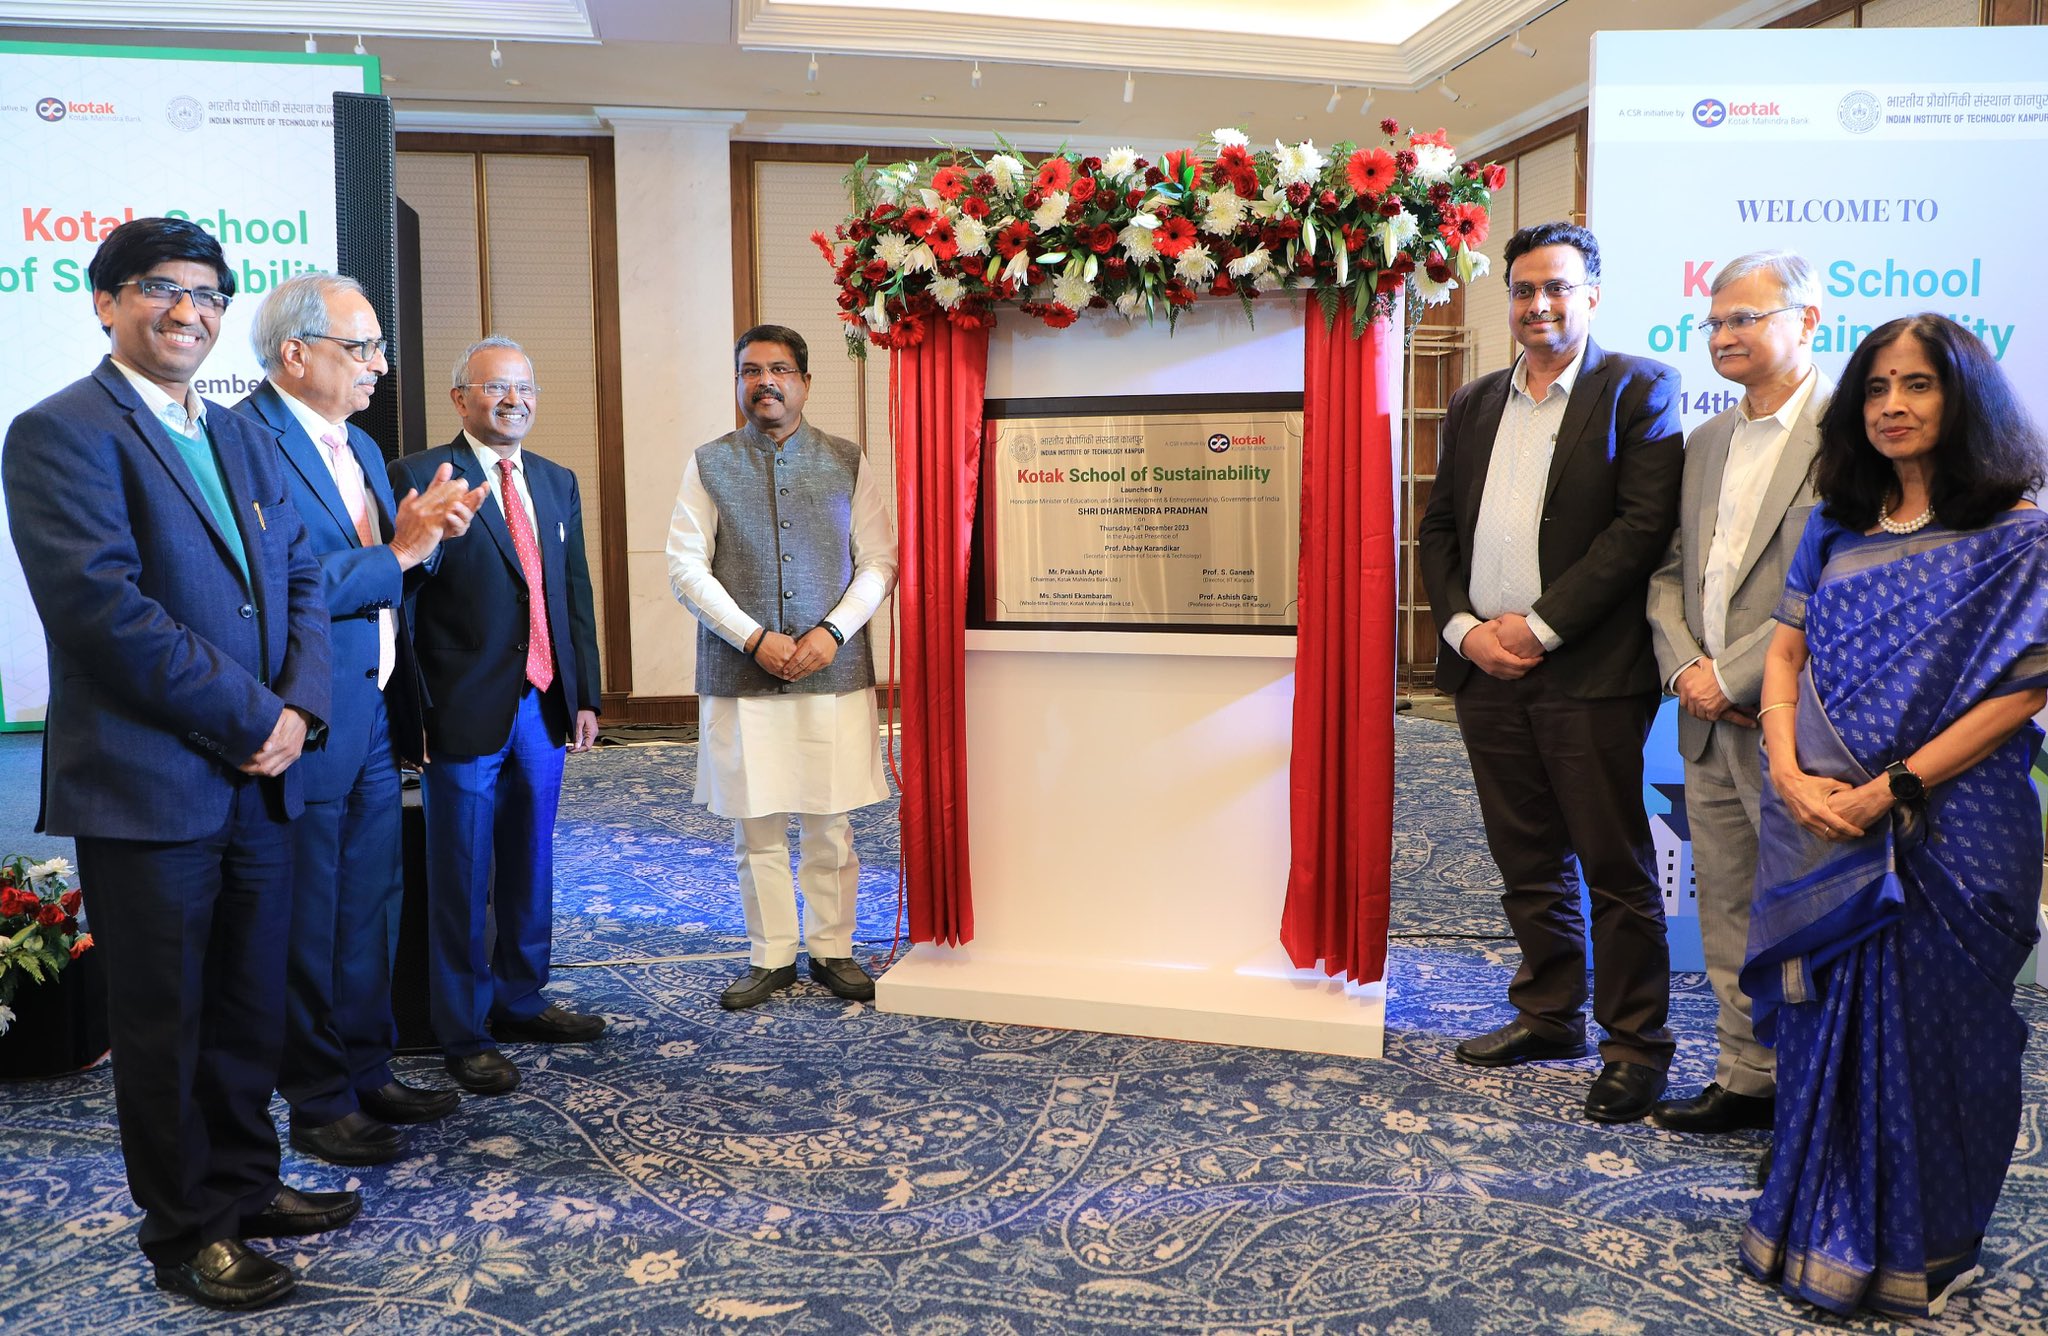 Union Minister Dharmendra Pradhan inaugurates Kotak School of Sustainability at IIT Kanpur